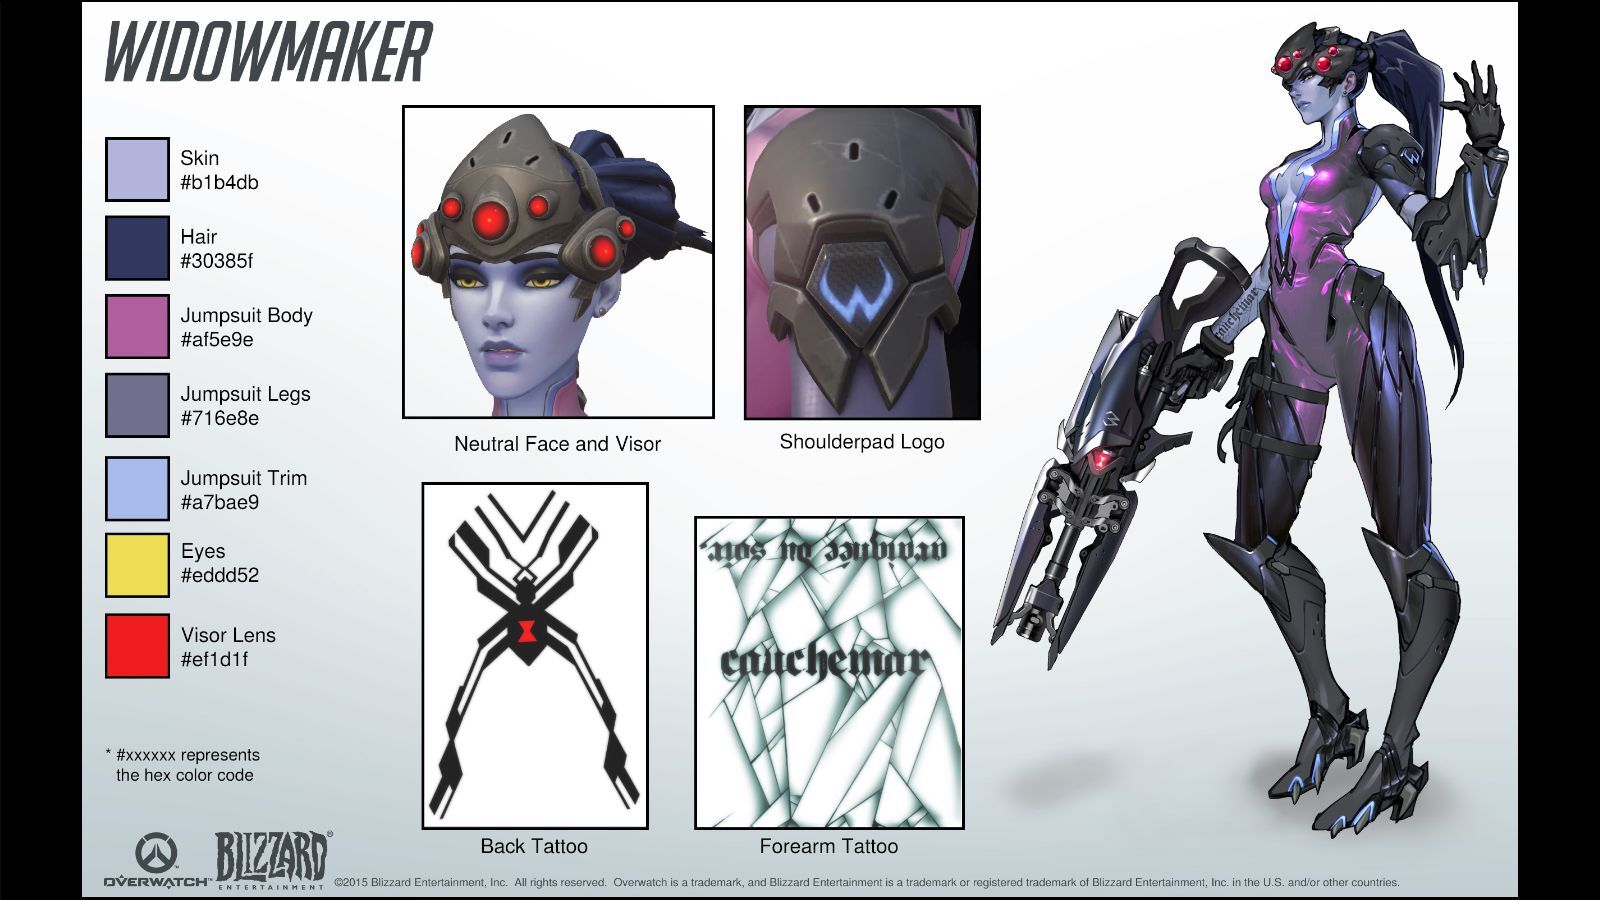 Widowmaker (Overwatch) - Wikipedia